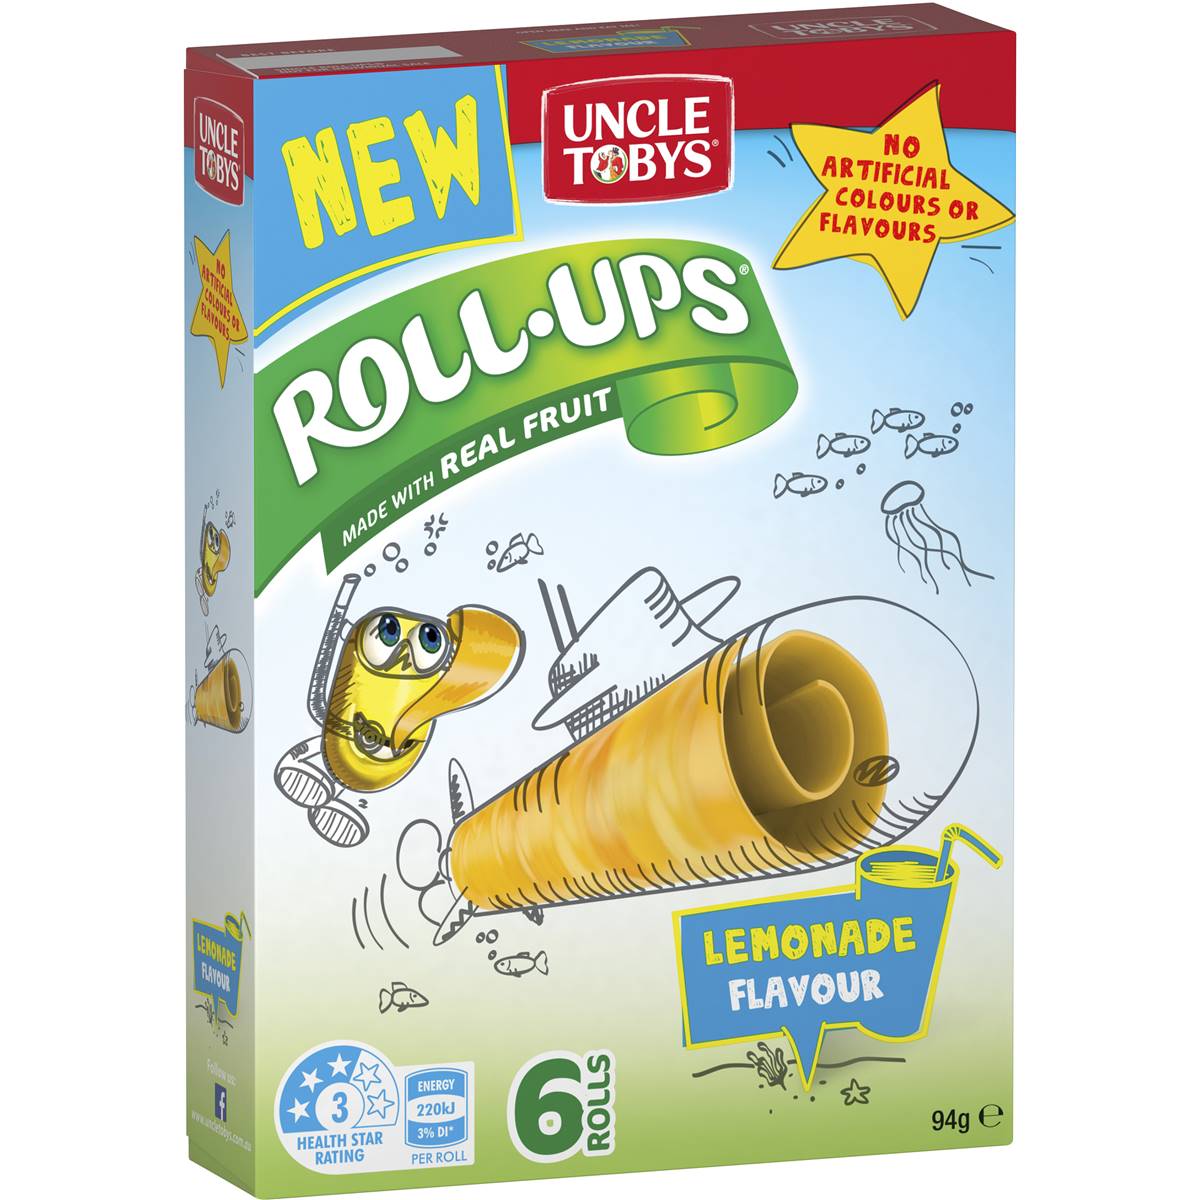 Calories in Uncle Tobys Roll Ups Lemonade Flavour